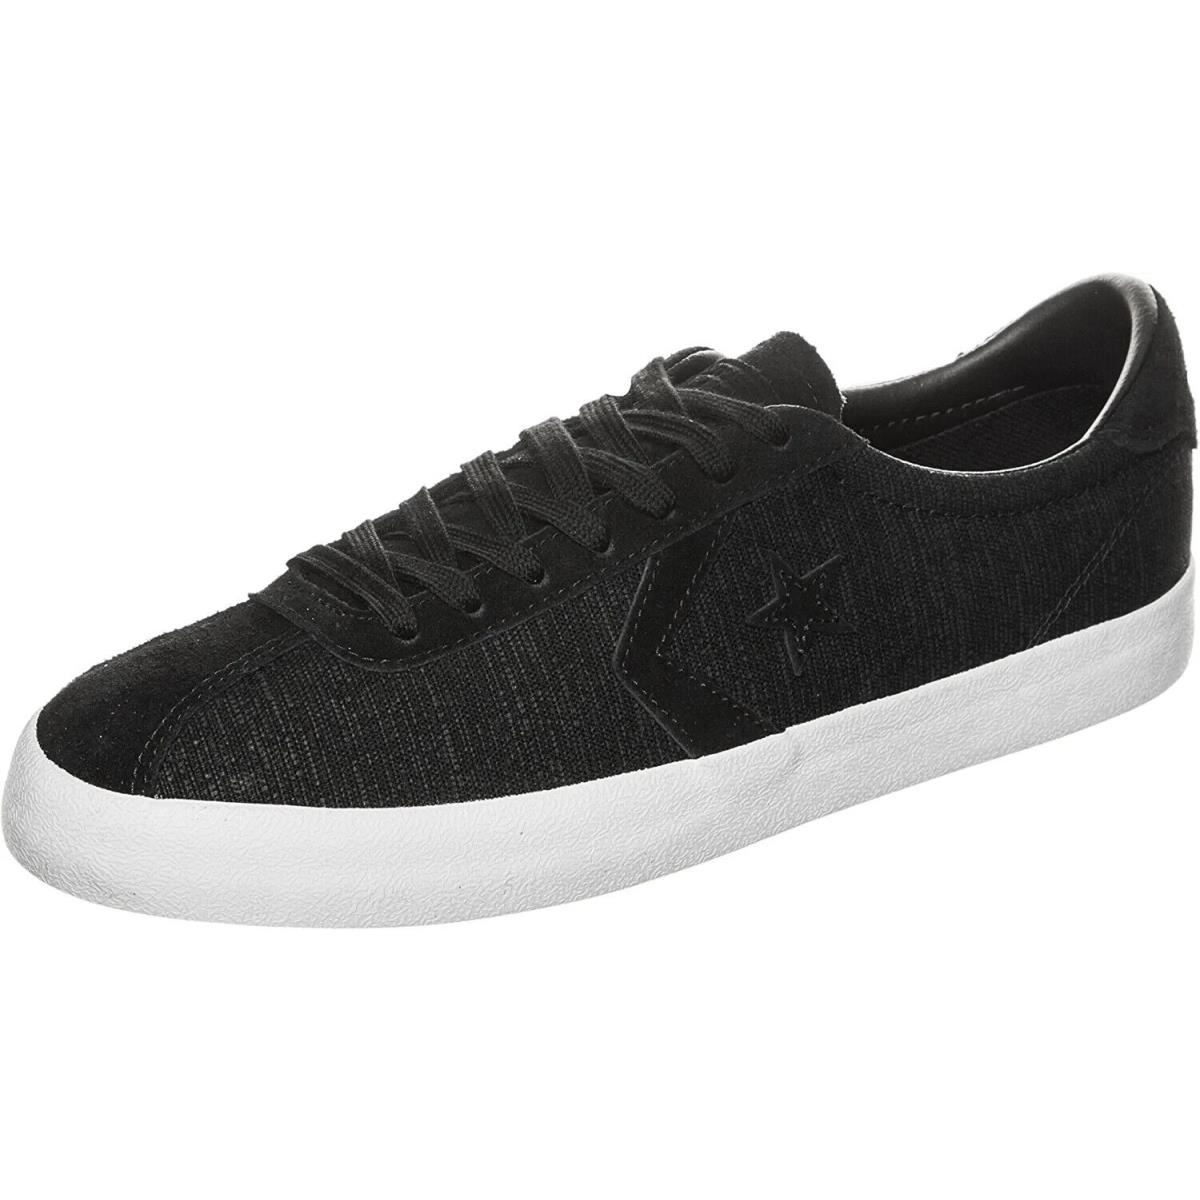 Converse Breakpoint Ox 155581C Men`s Black White Skateboard Shoes US 7 HS4319